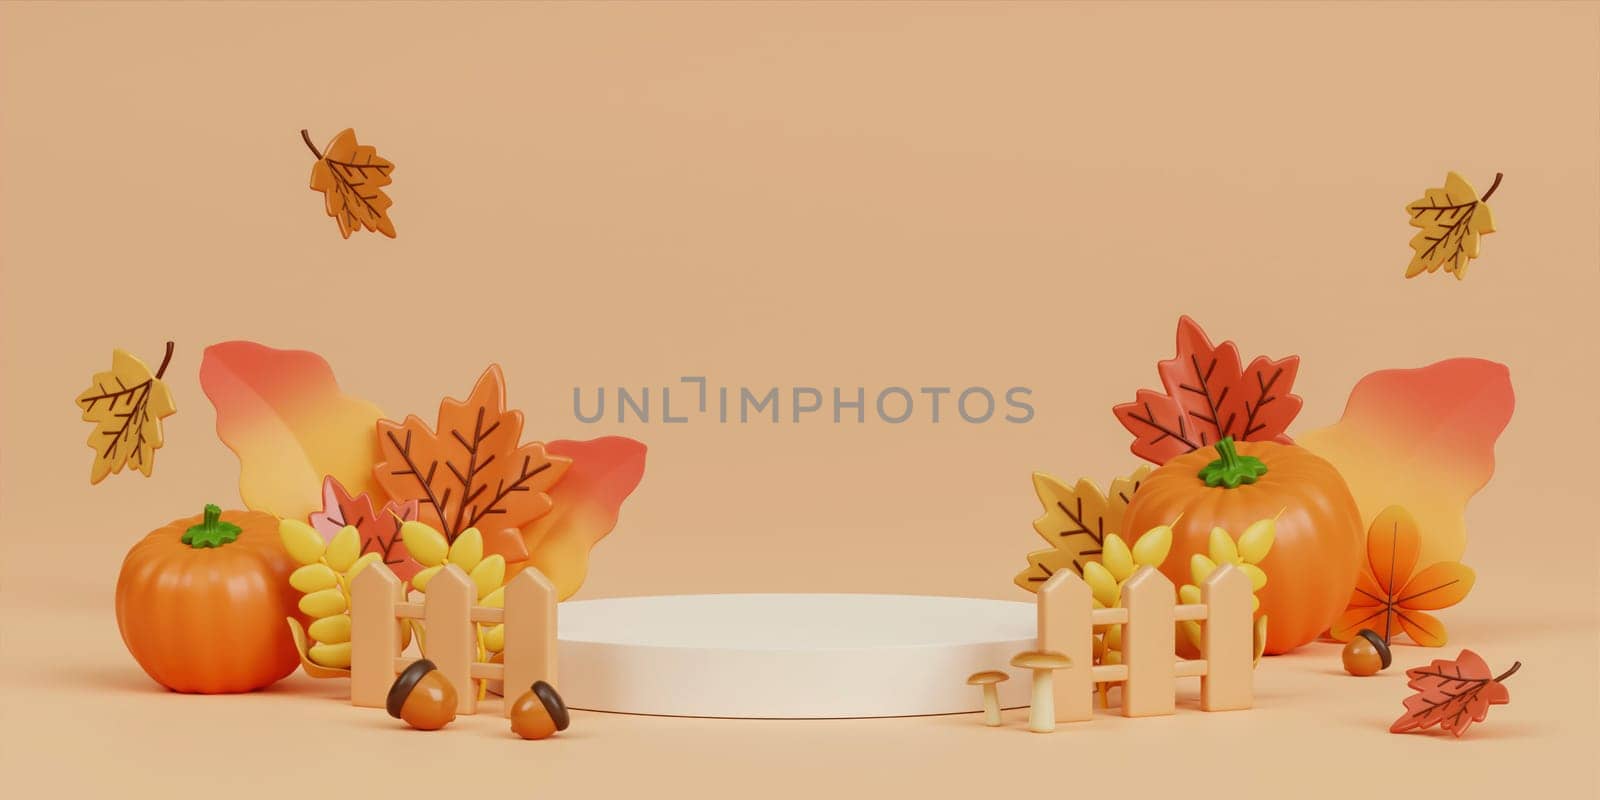 Autumn Display Podium Decoration Background with Autumn leaves and empty minimal podium pedestal product display. 3d render illustration..